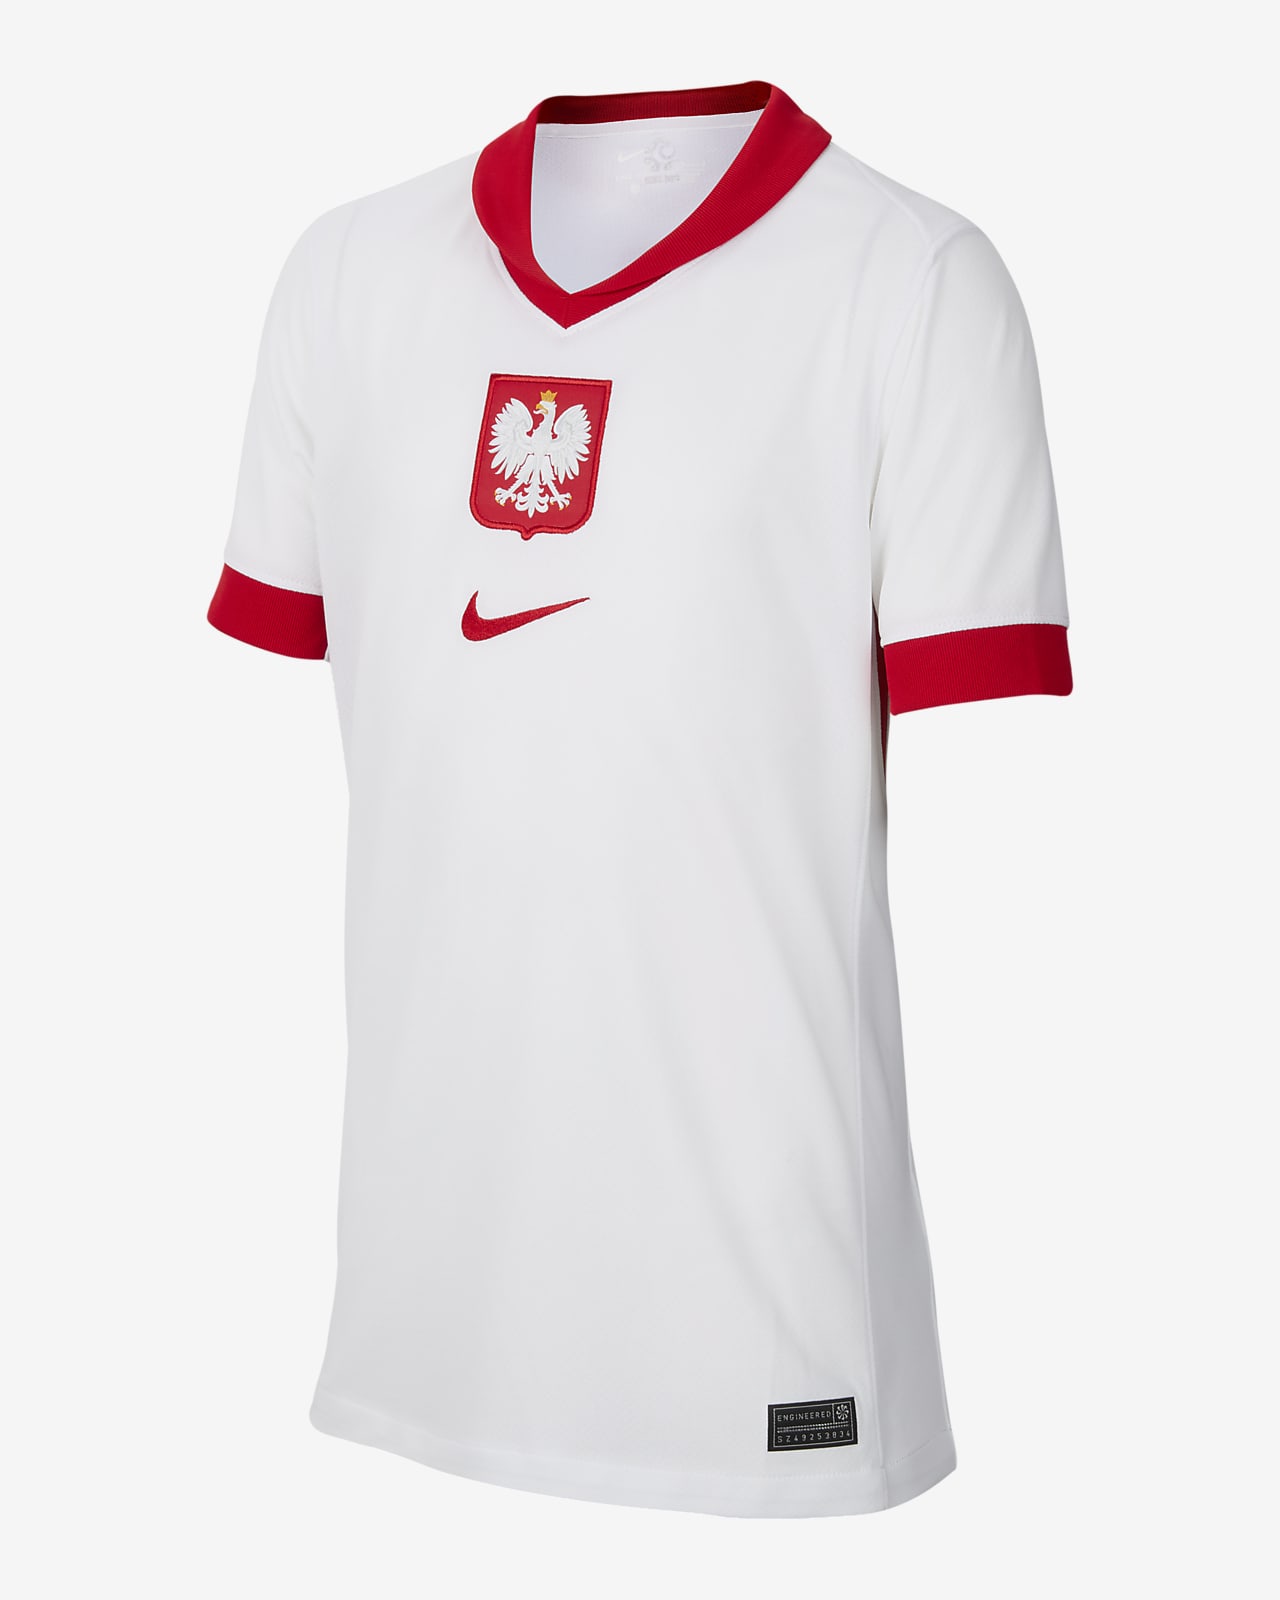 Pop Threads Poland Soccer National Team Football Retro Crest Baby Toddler  Kids Girl Boy T-Shirt, Infant